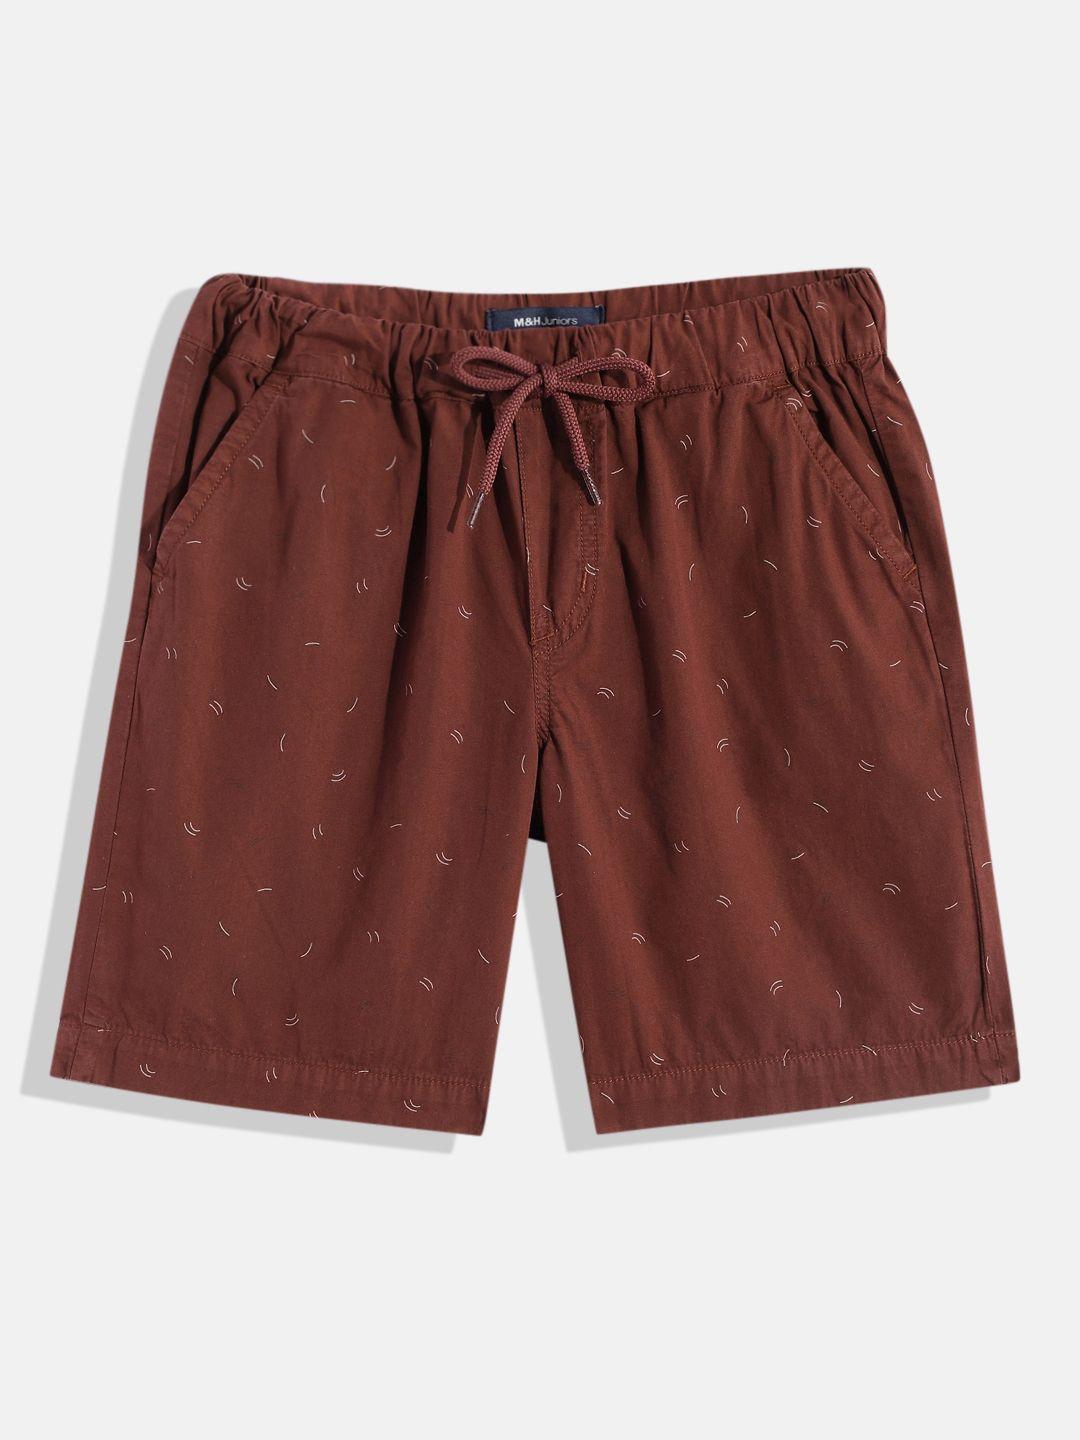 m&h juniors boys brown printed pure cotton shorts